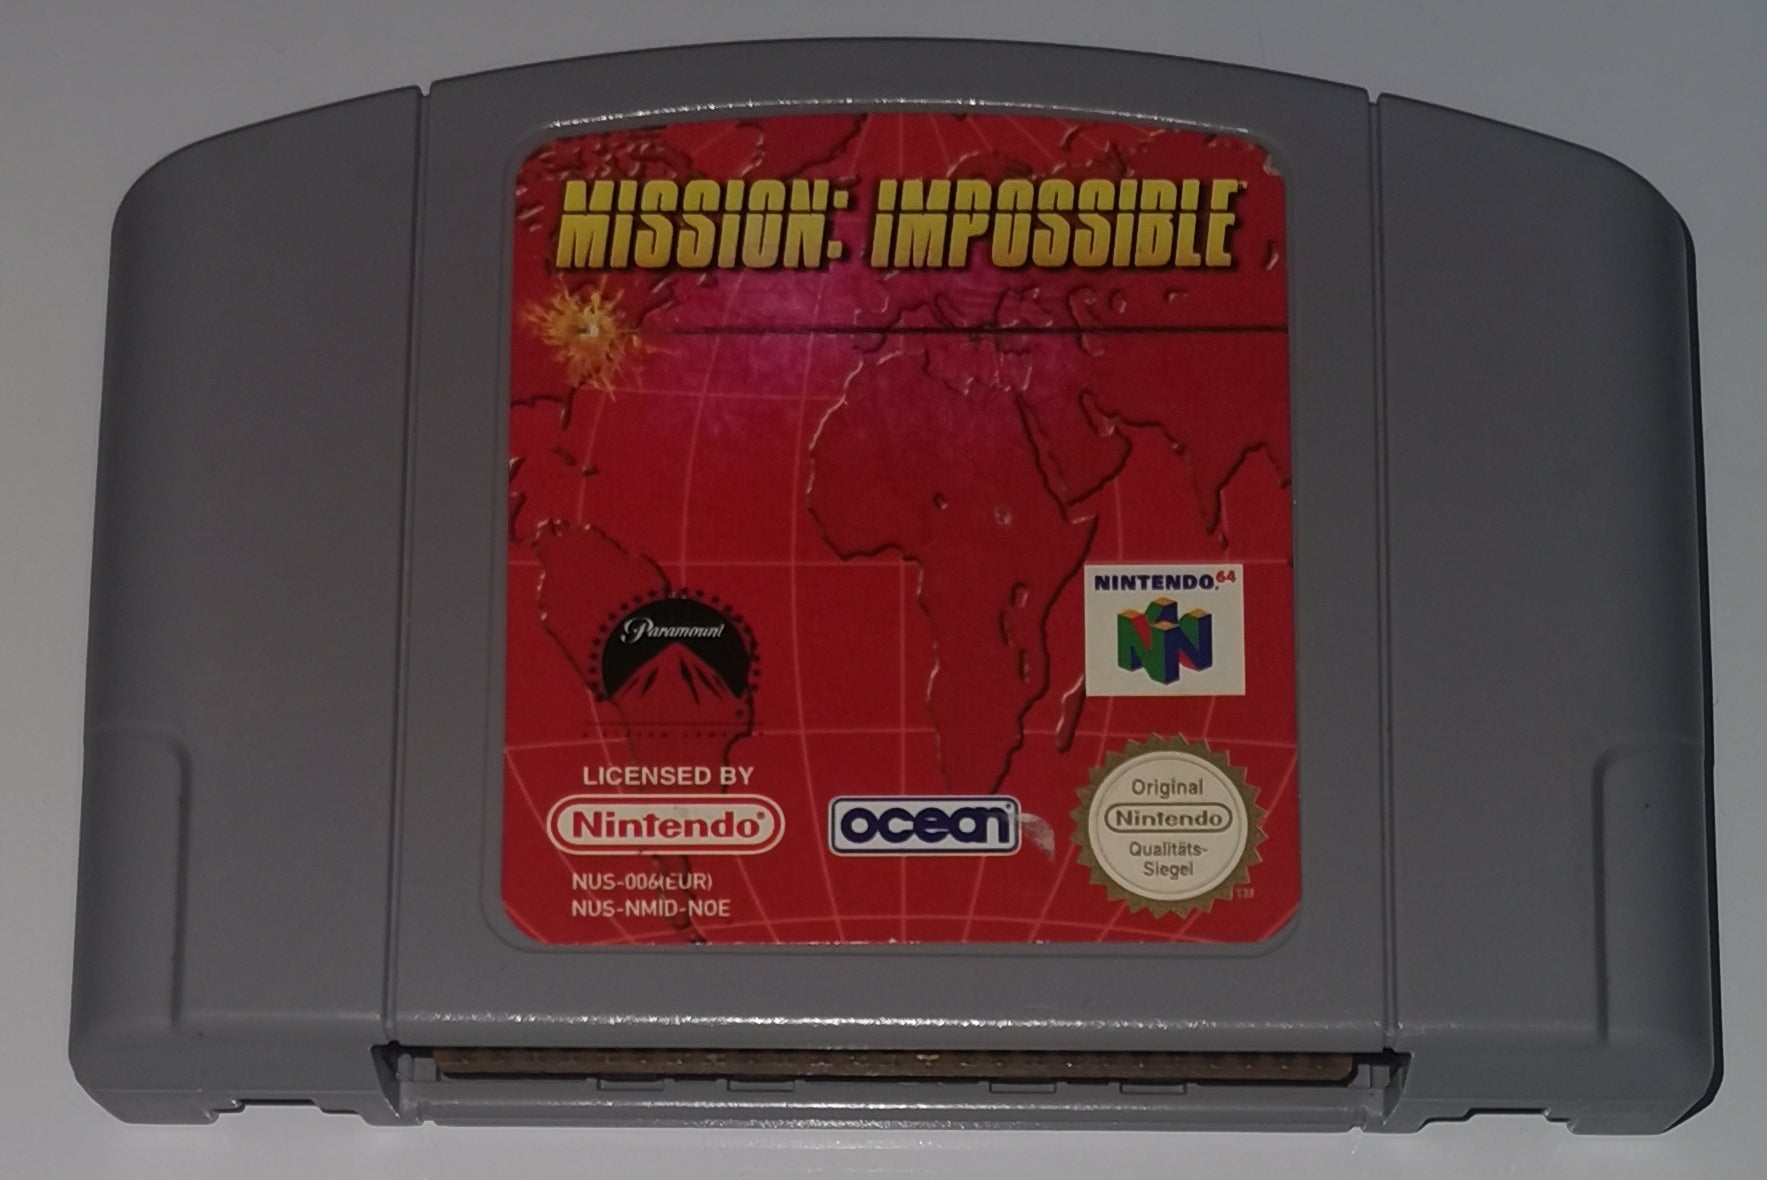 Mission Impossible Nintendo 64 [Akzeptabel]